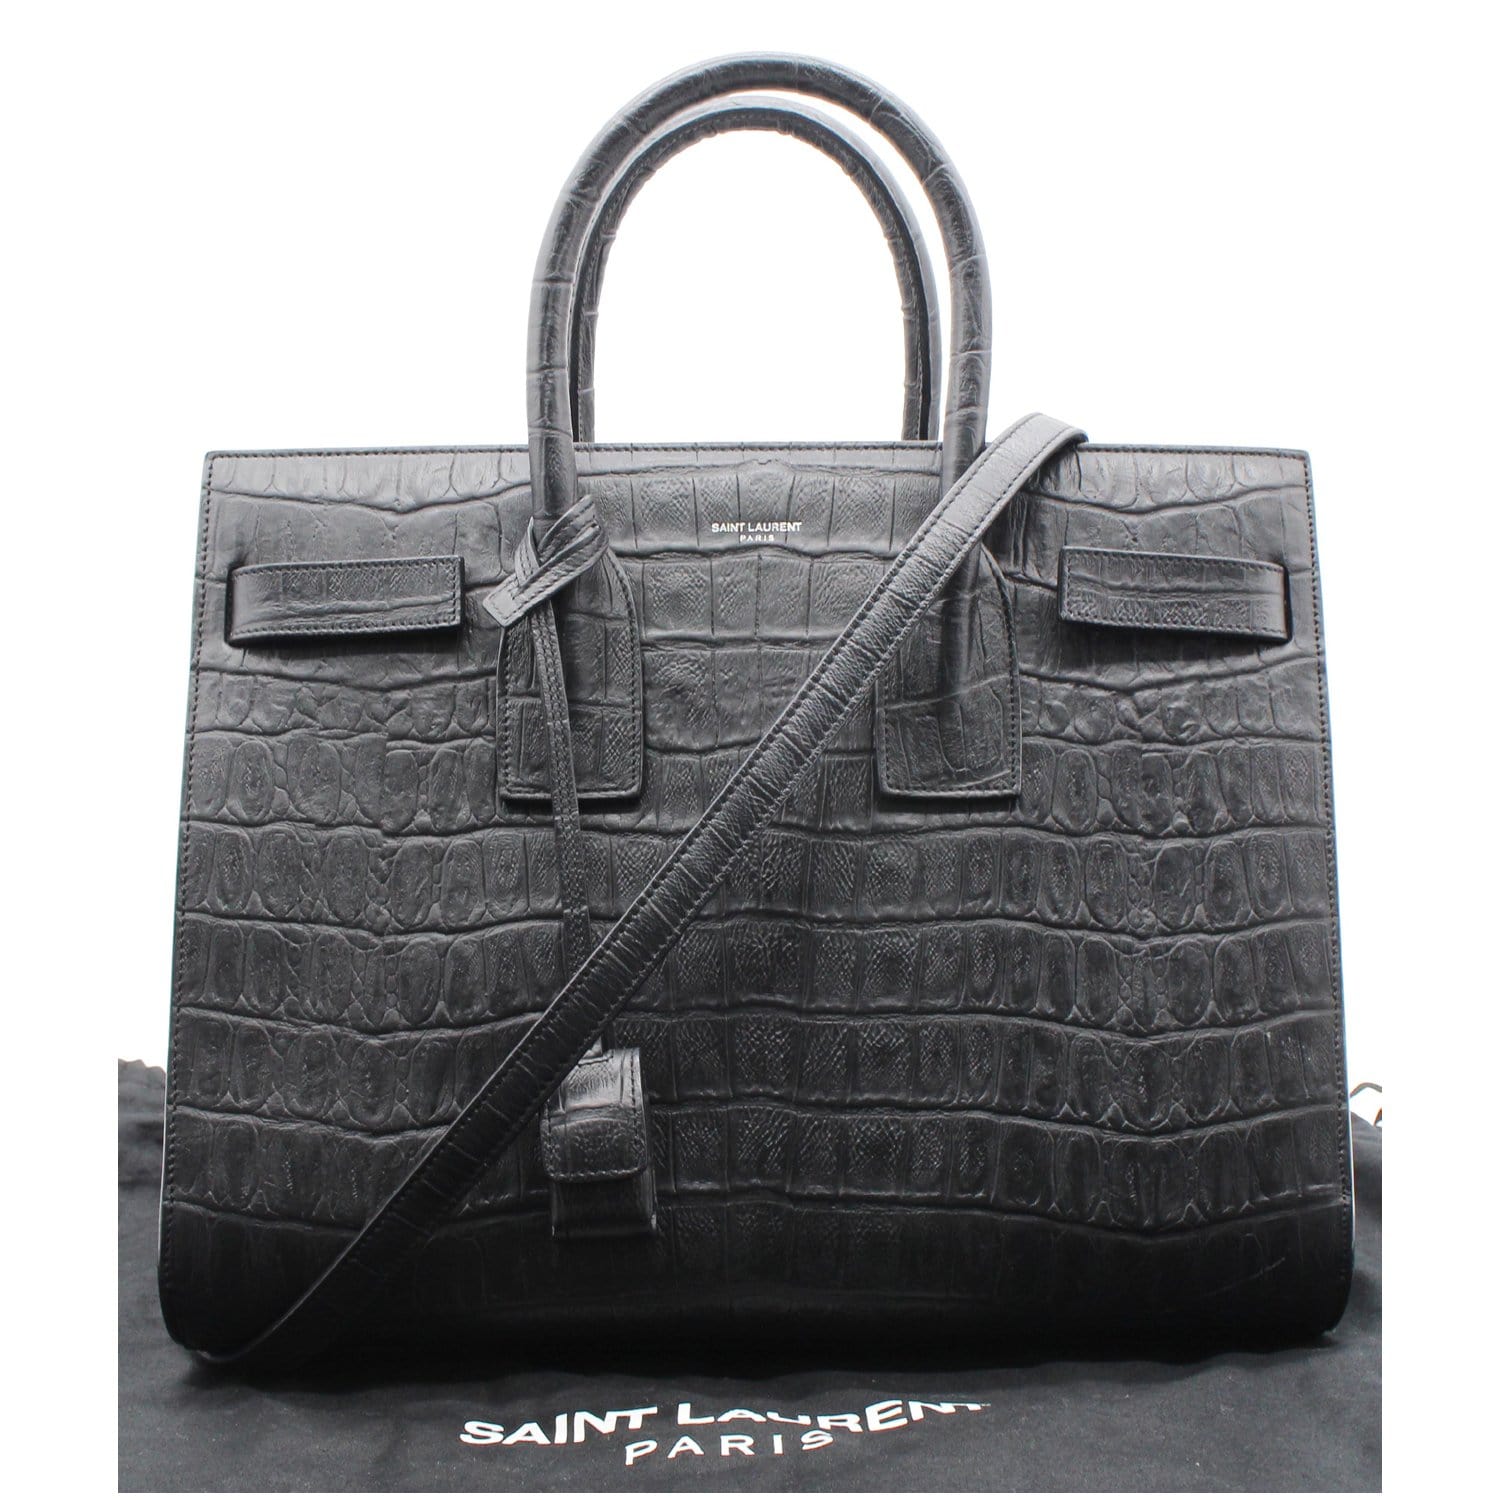 Yves Saint Laurent Sac de Jour Crocodile-Embossed Satchel Bag Grey